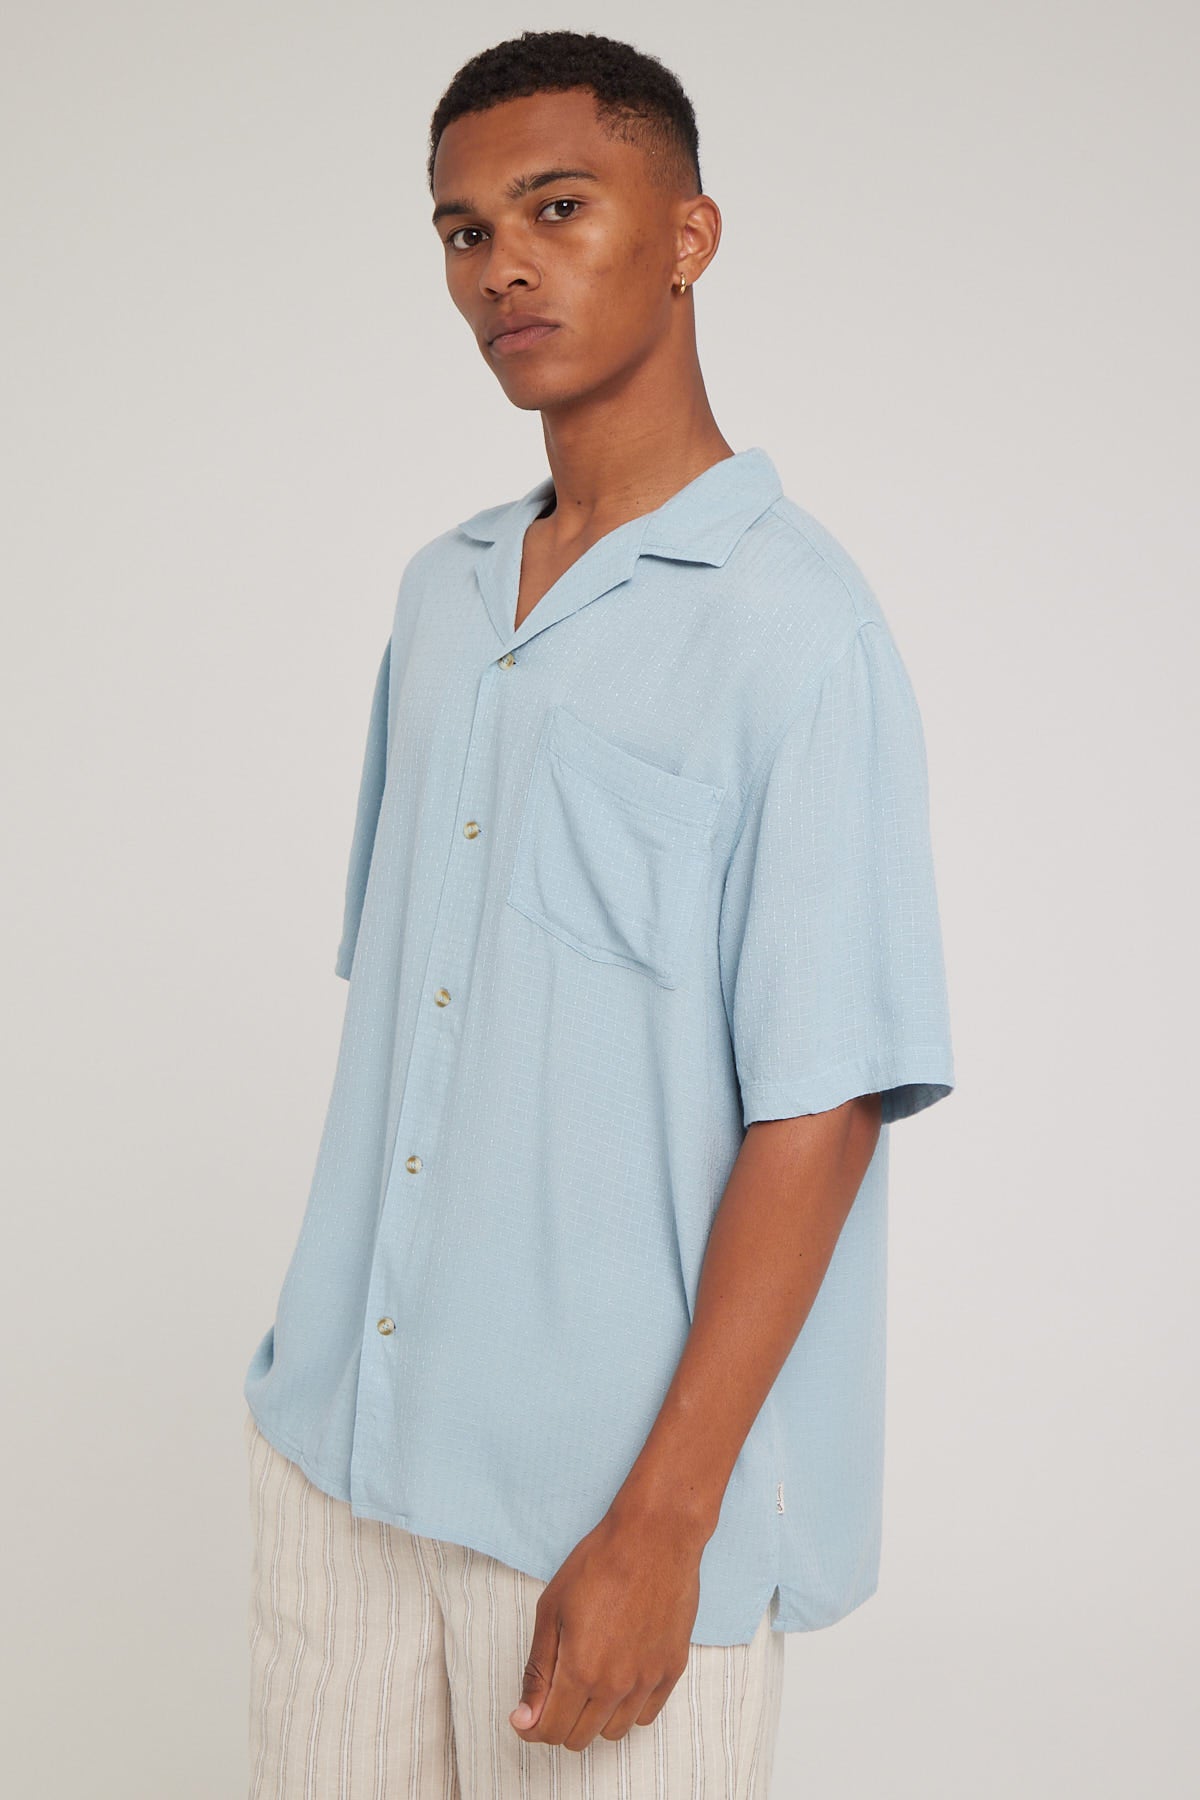 Barney Cools Resort Shirt Blue Jacquard